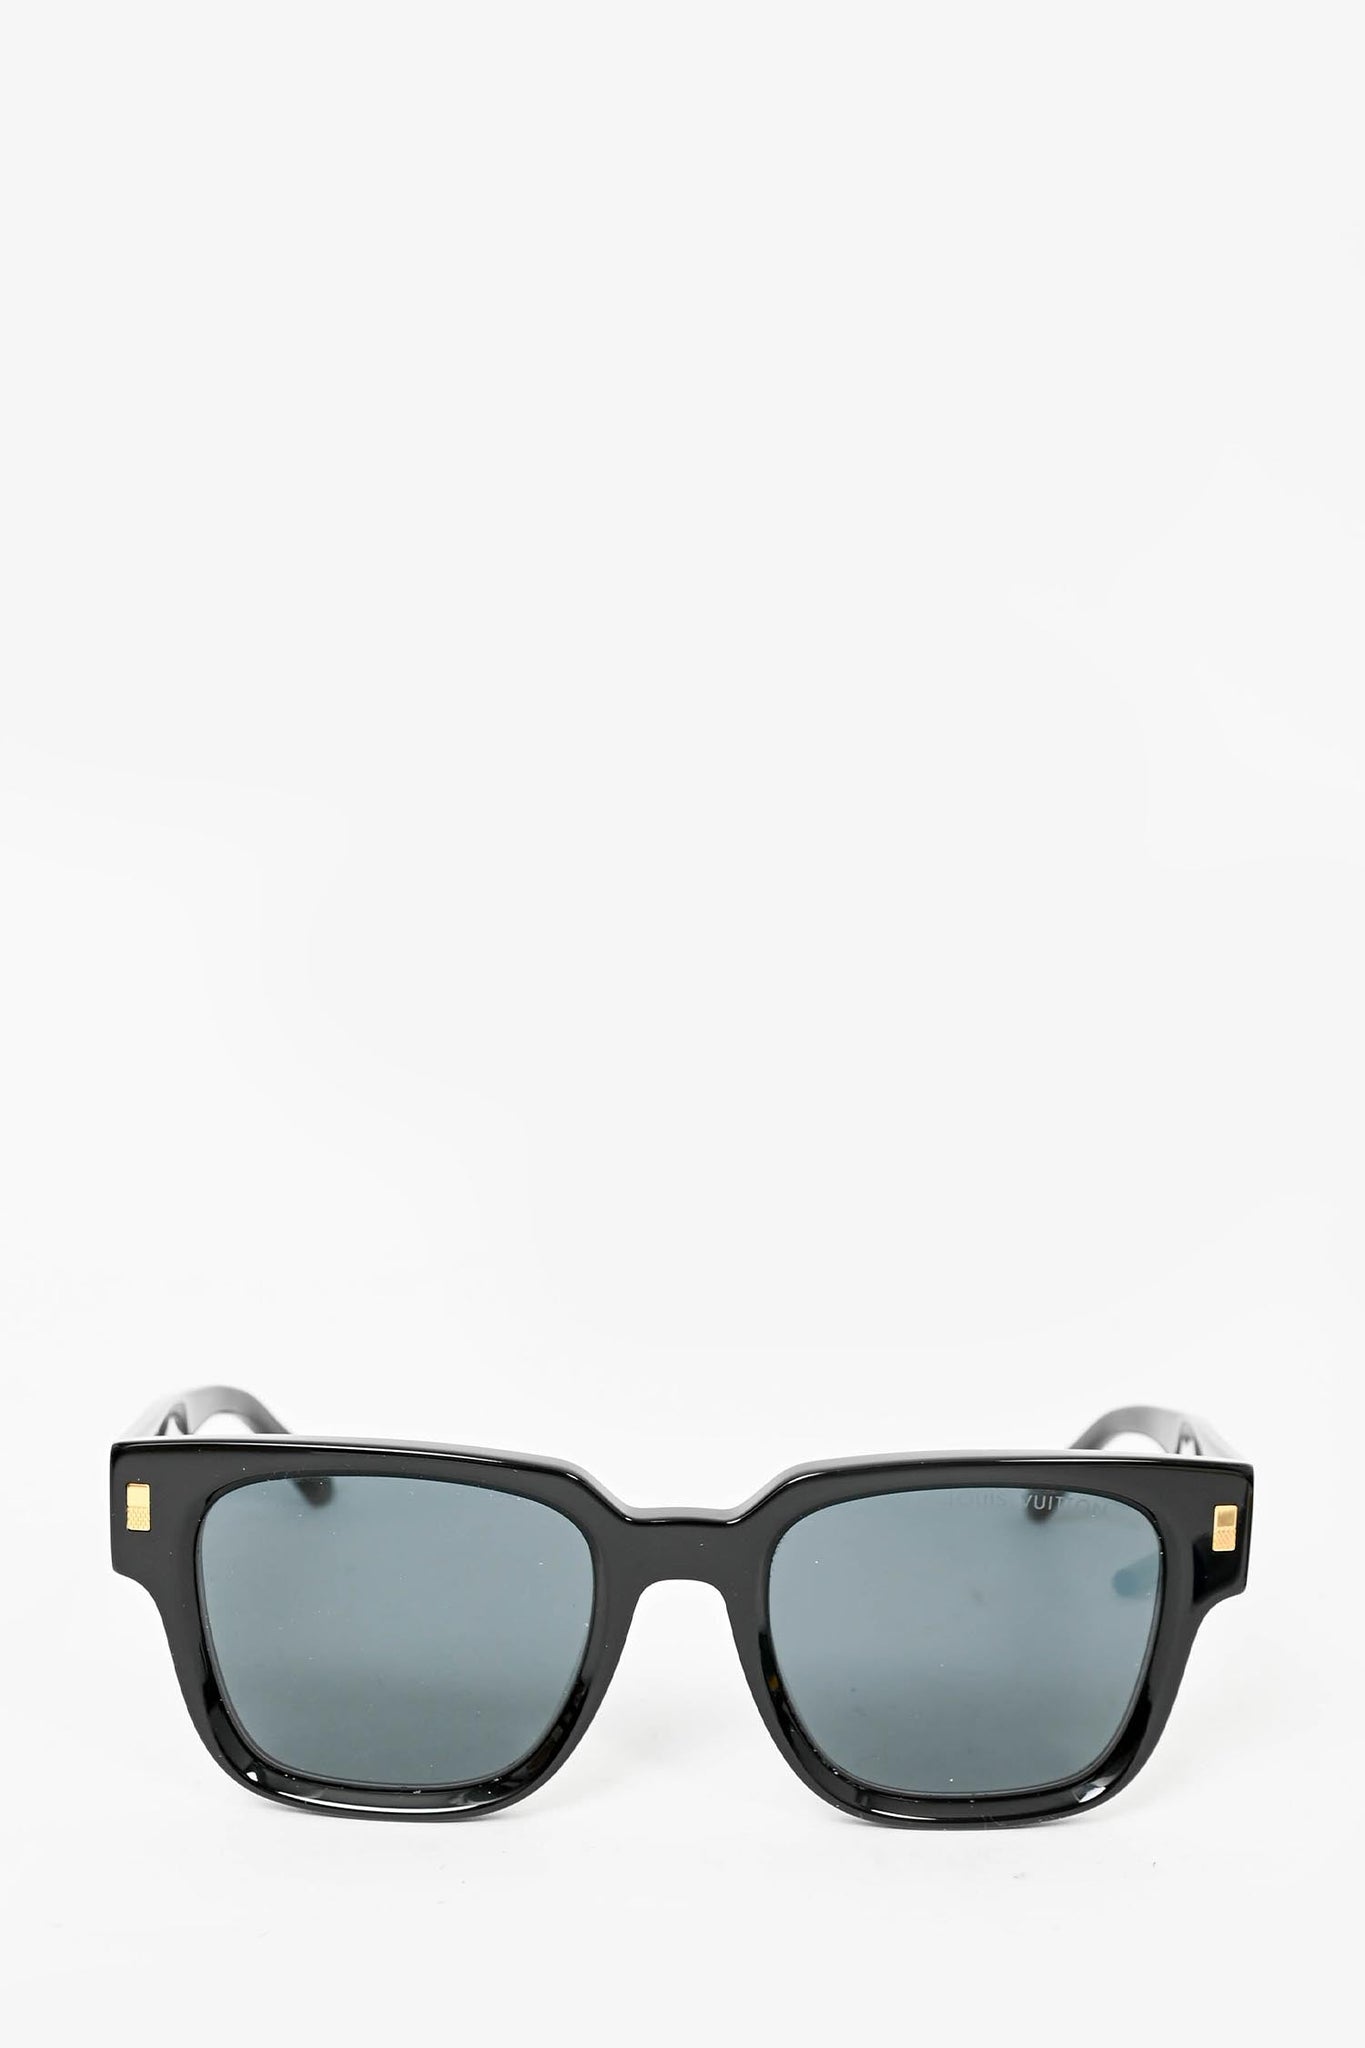 Louis Vuitton LV Escape Square Sunglasses Black Acetate. Size E